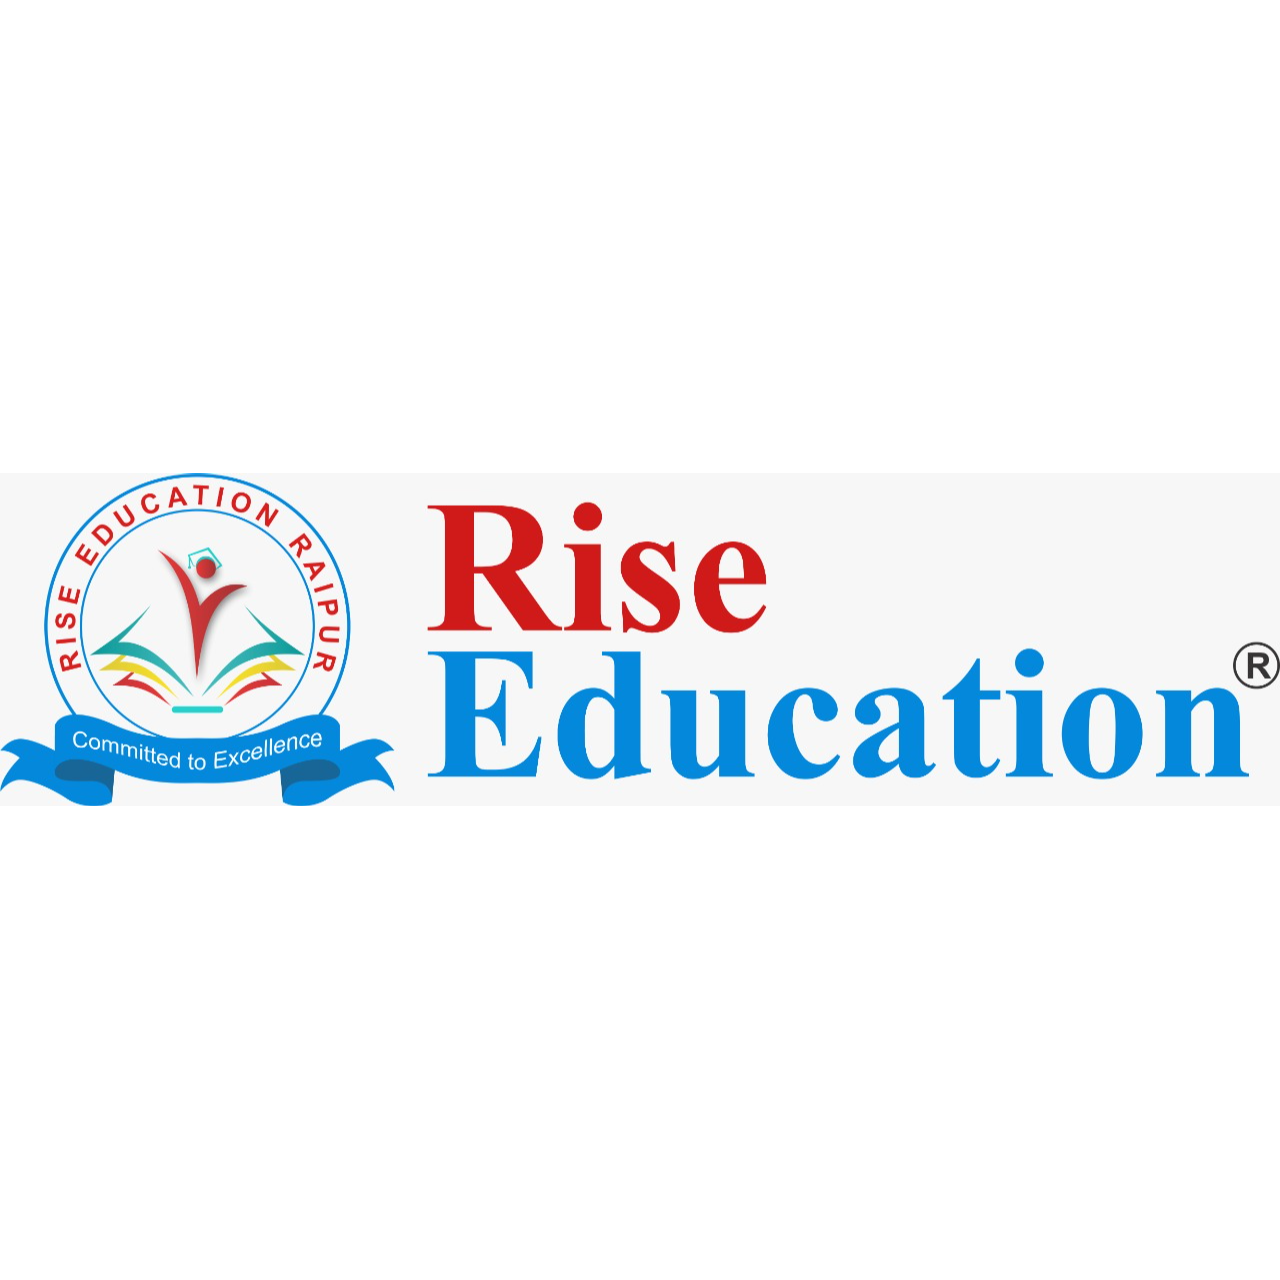 Rise Education